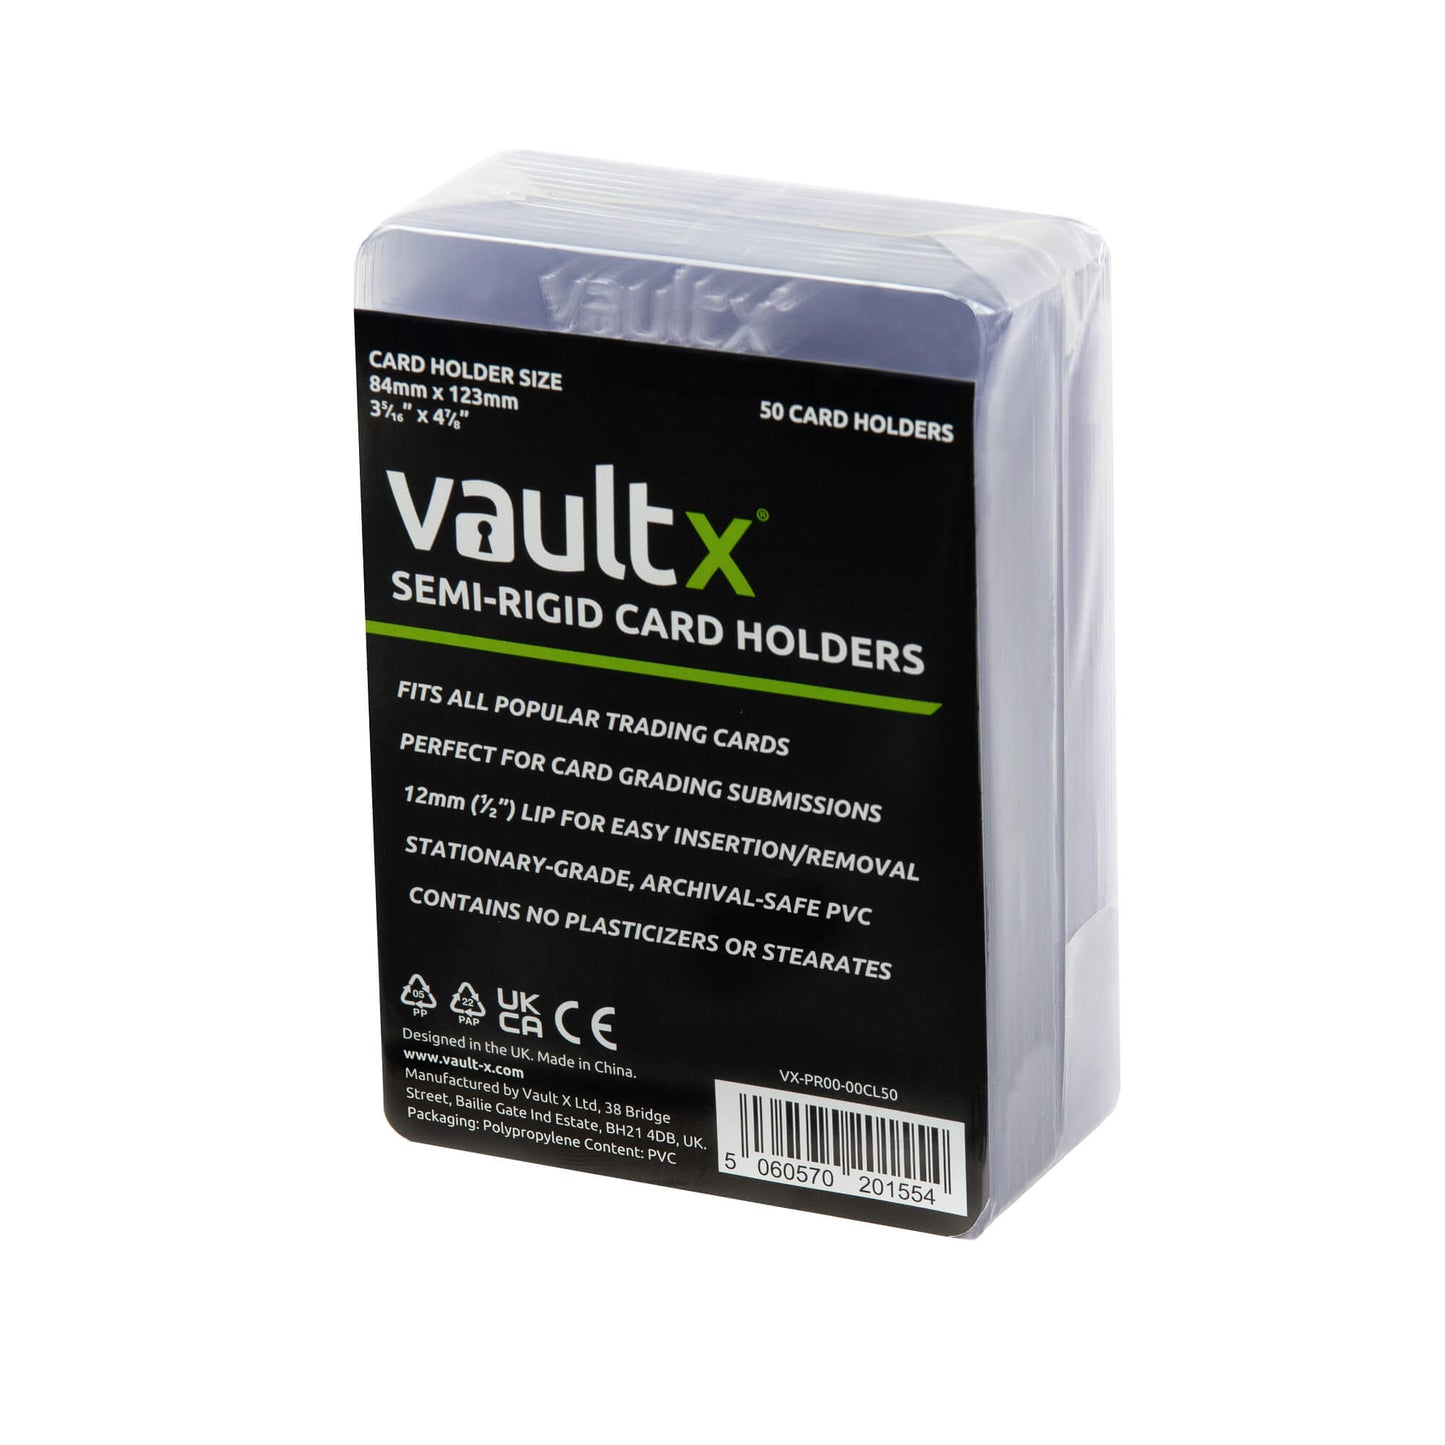 VAULT X SEMI-RIGID CARD HOLDERS (50 PACK)